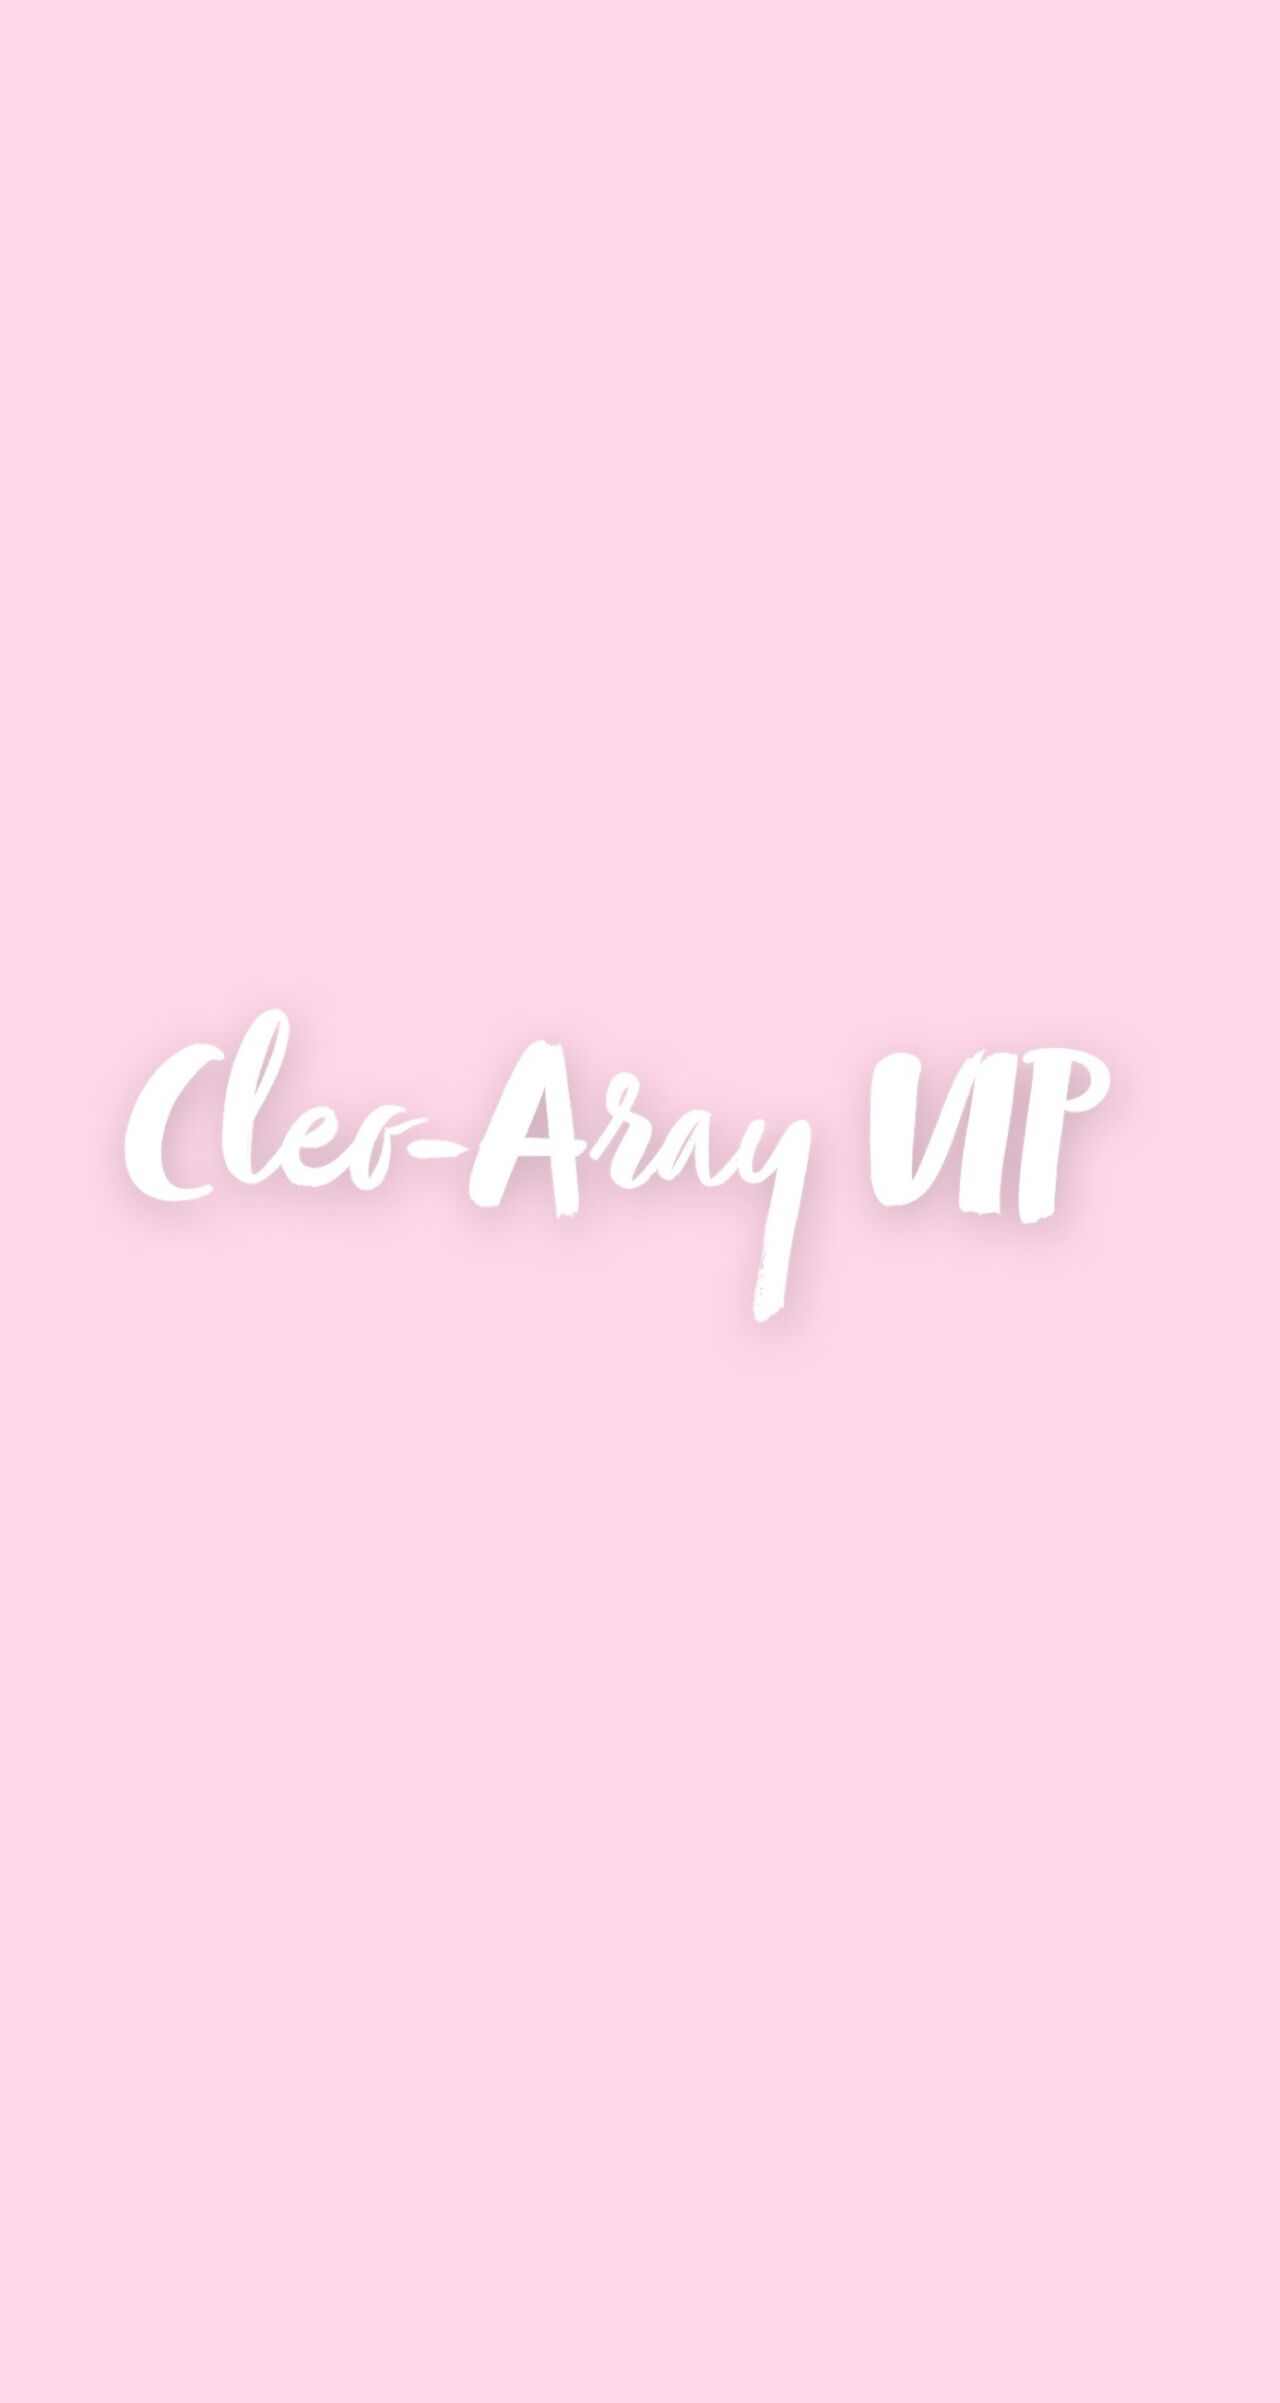 See Cleo ArayVIP profile